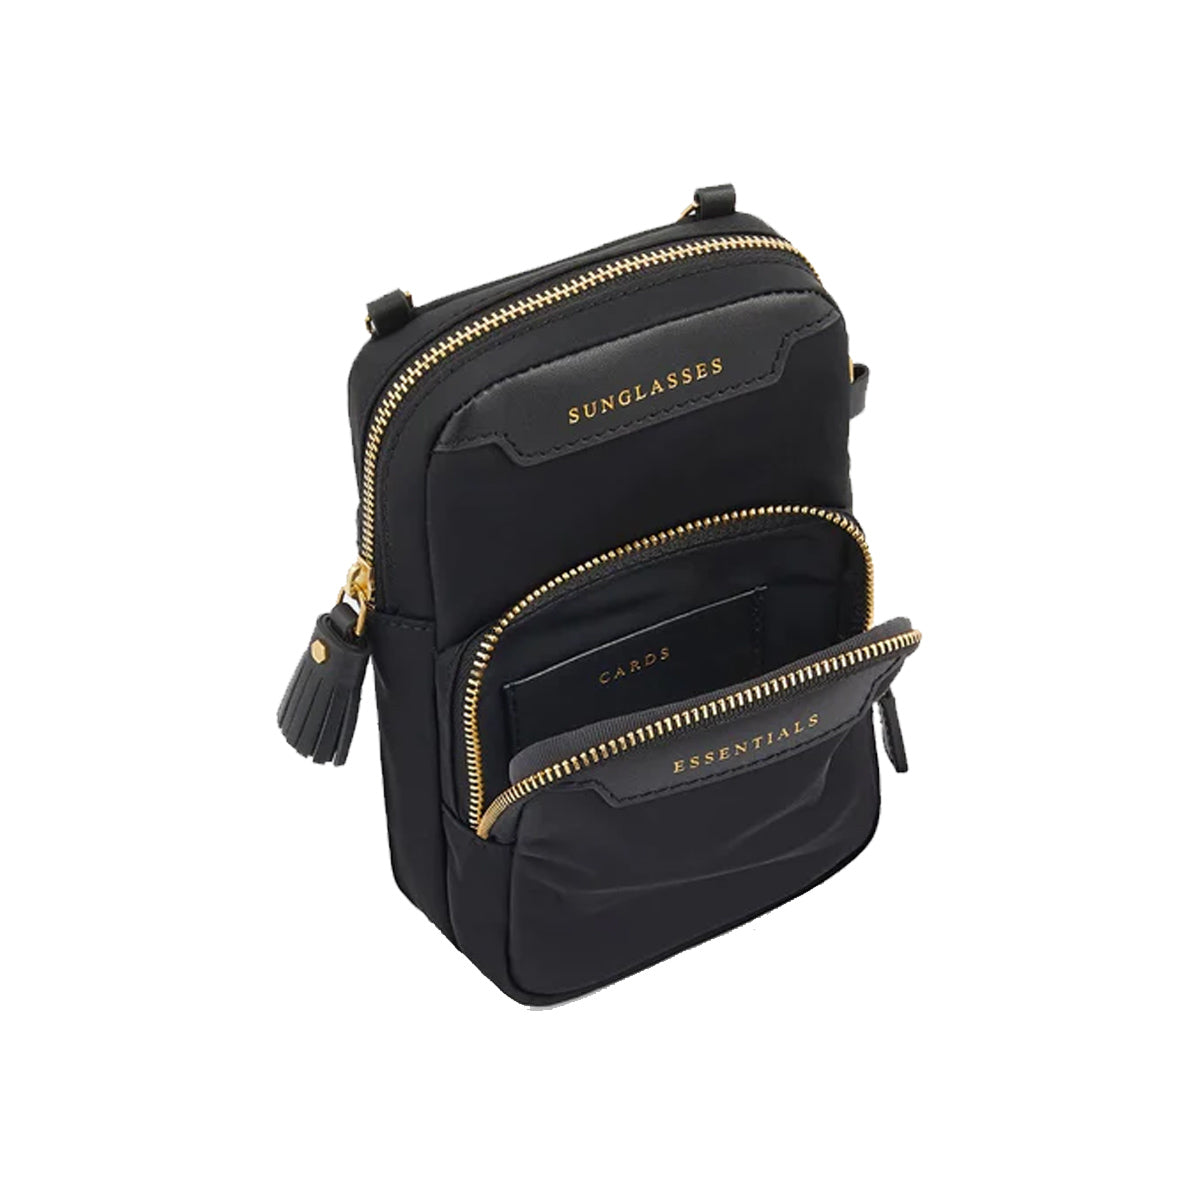 "Essentials" Crossbody Bag in Black Nylon